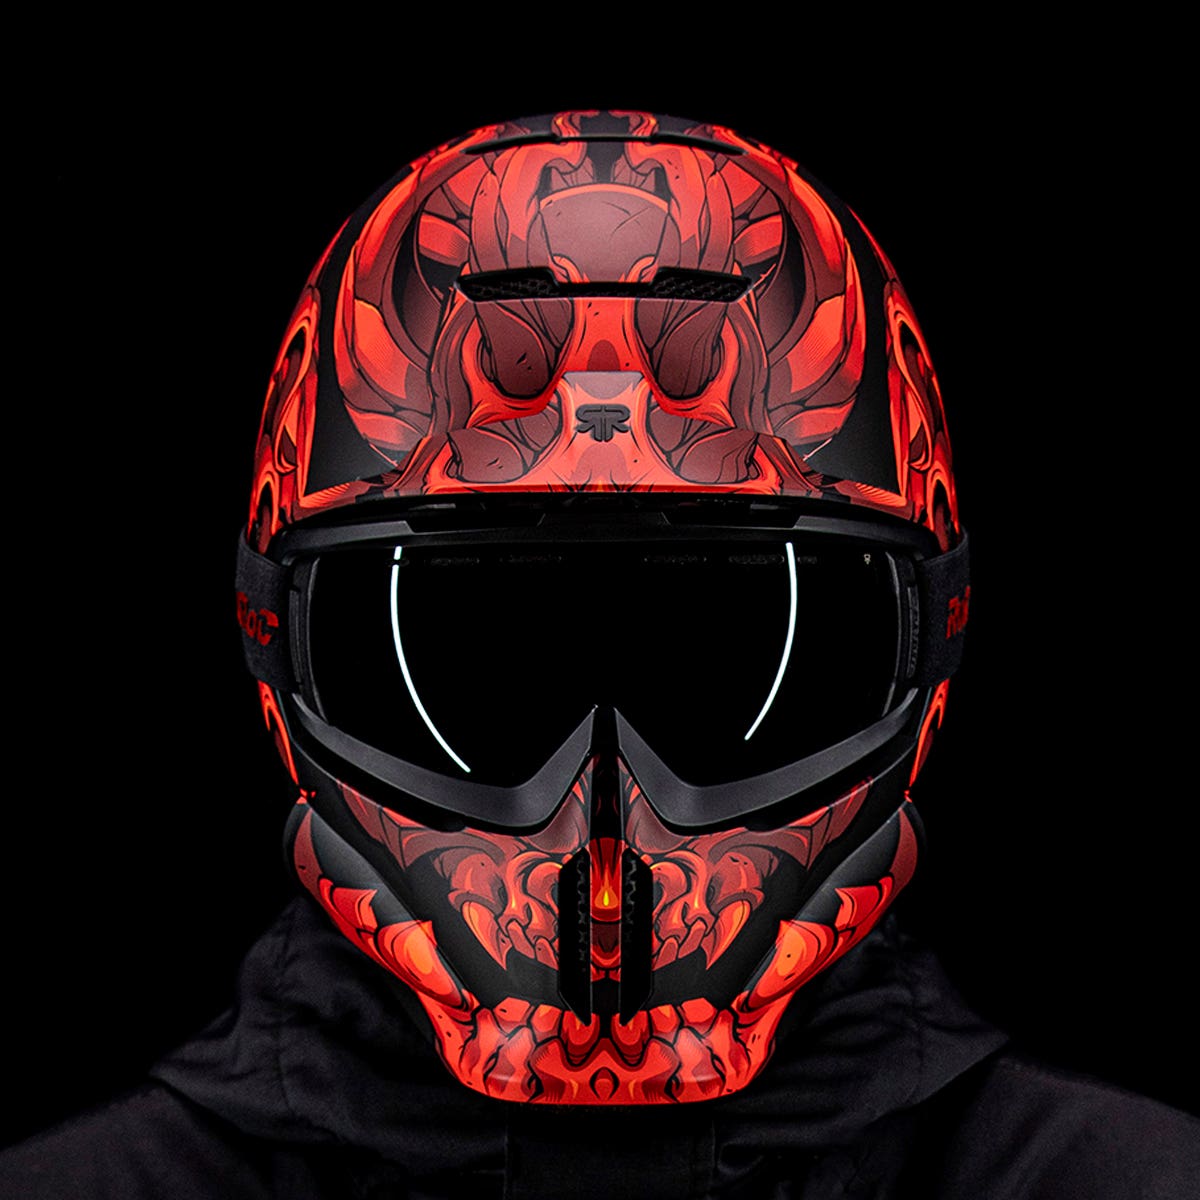 RG1-DX El Diablo - Snow-Sports Ski Helmet (Asian Fit)